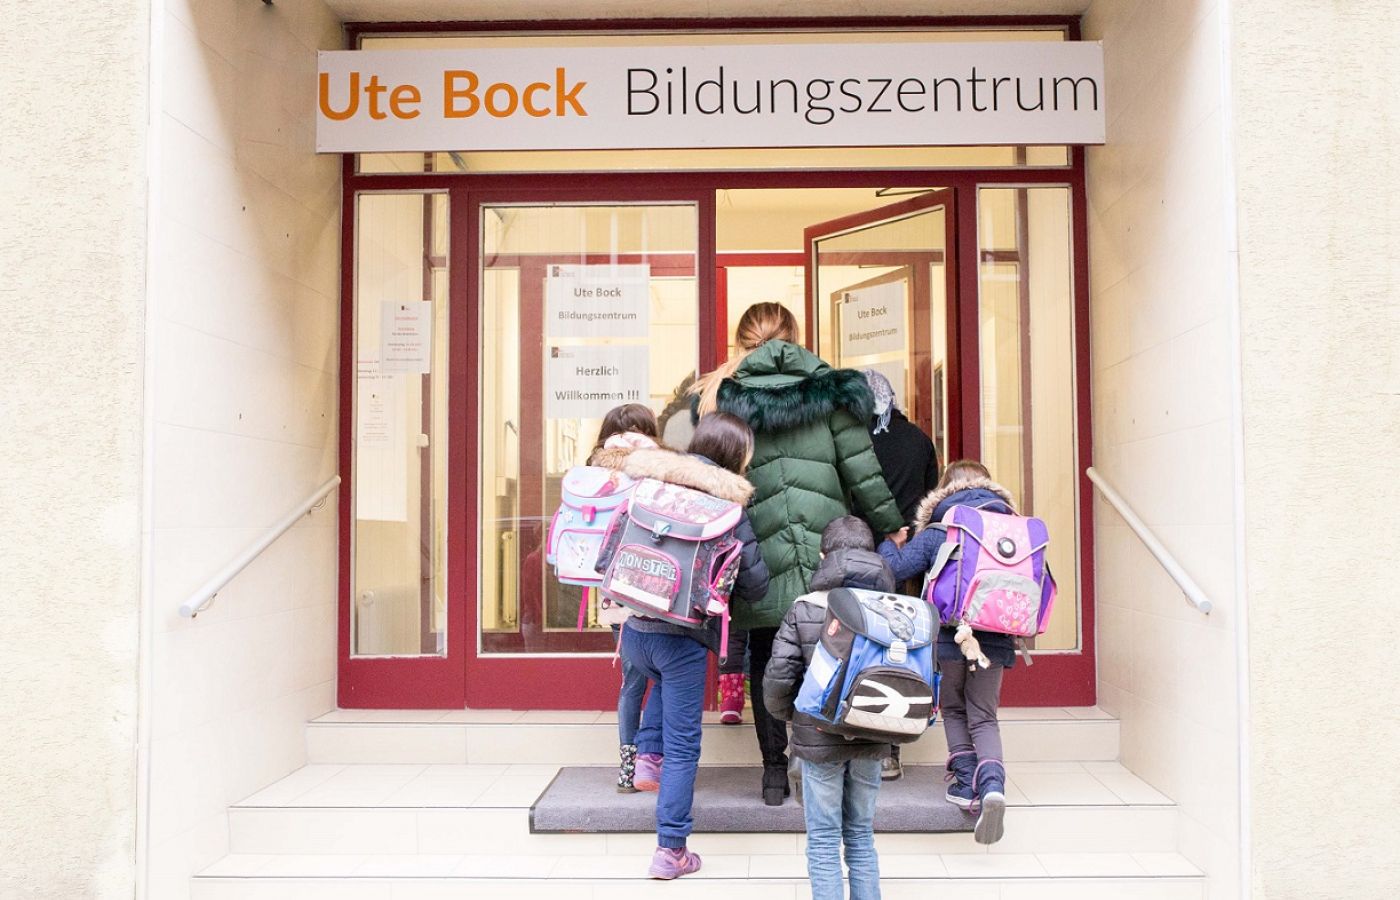 Ute Bock Bildungszentrum